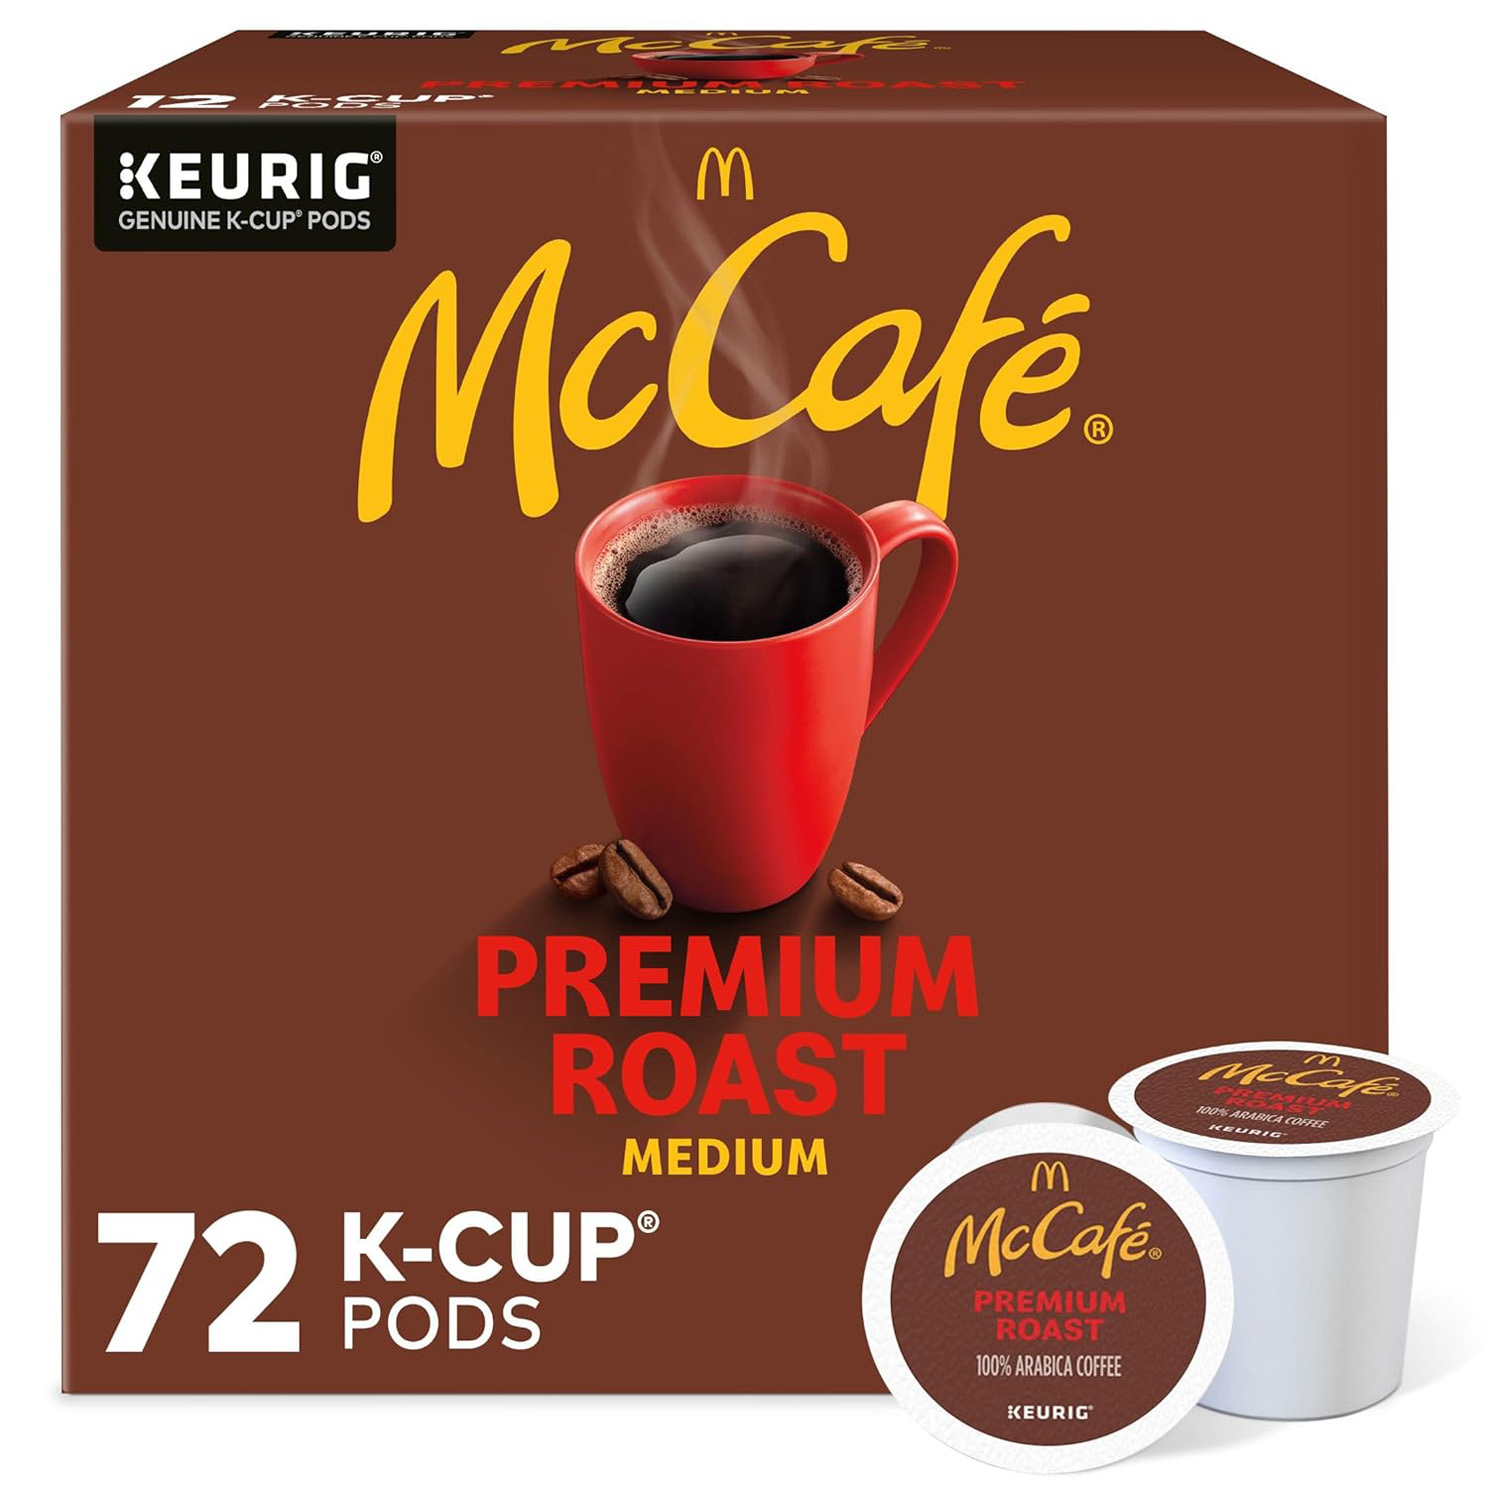 McCafe Premium Roast, Keurig Single Serve K-Cup Pods, Medium Roast Coffee Pods, 72 Count